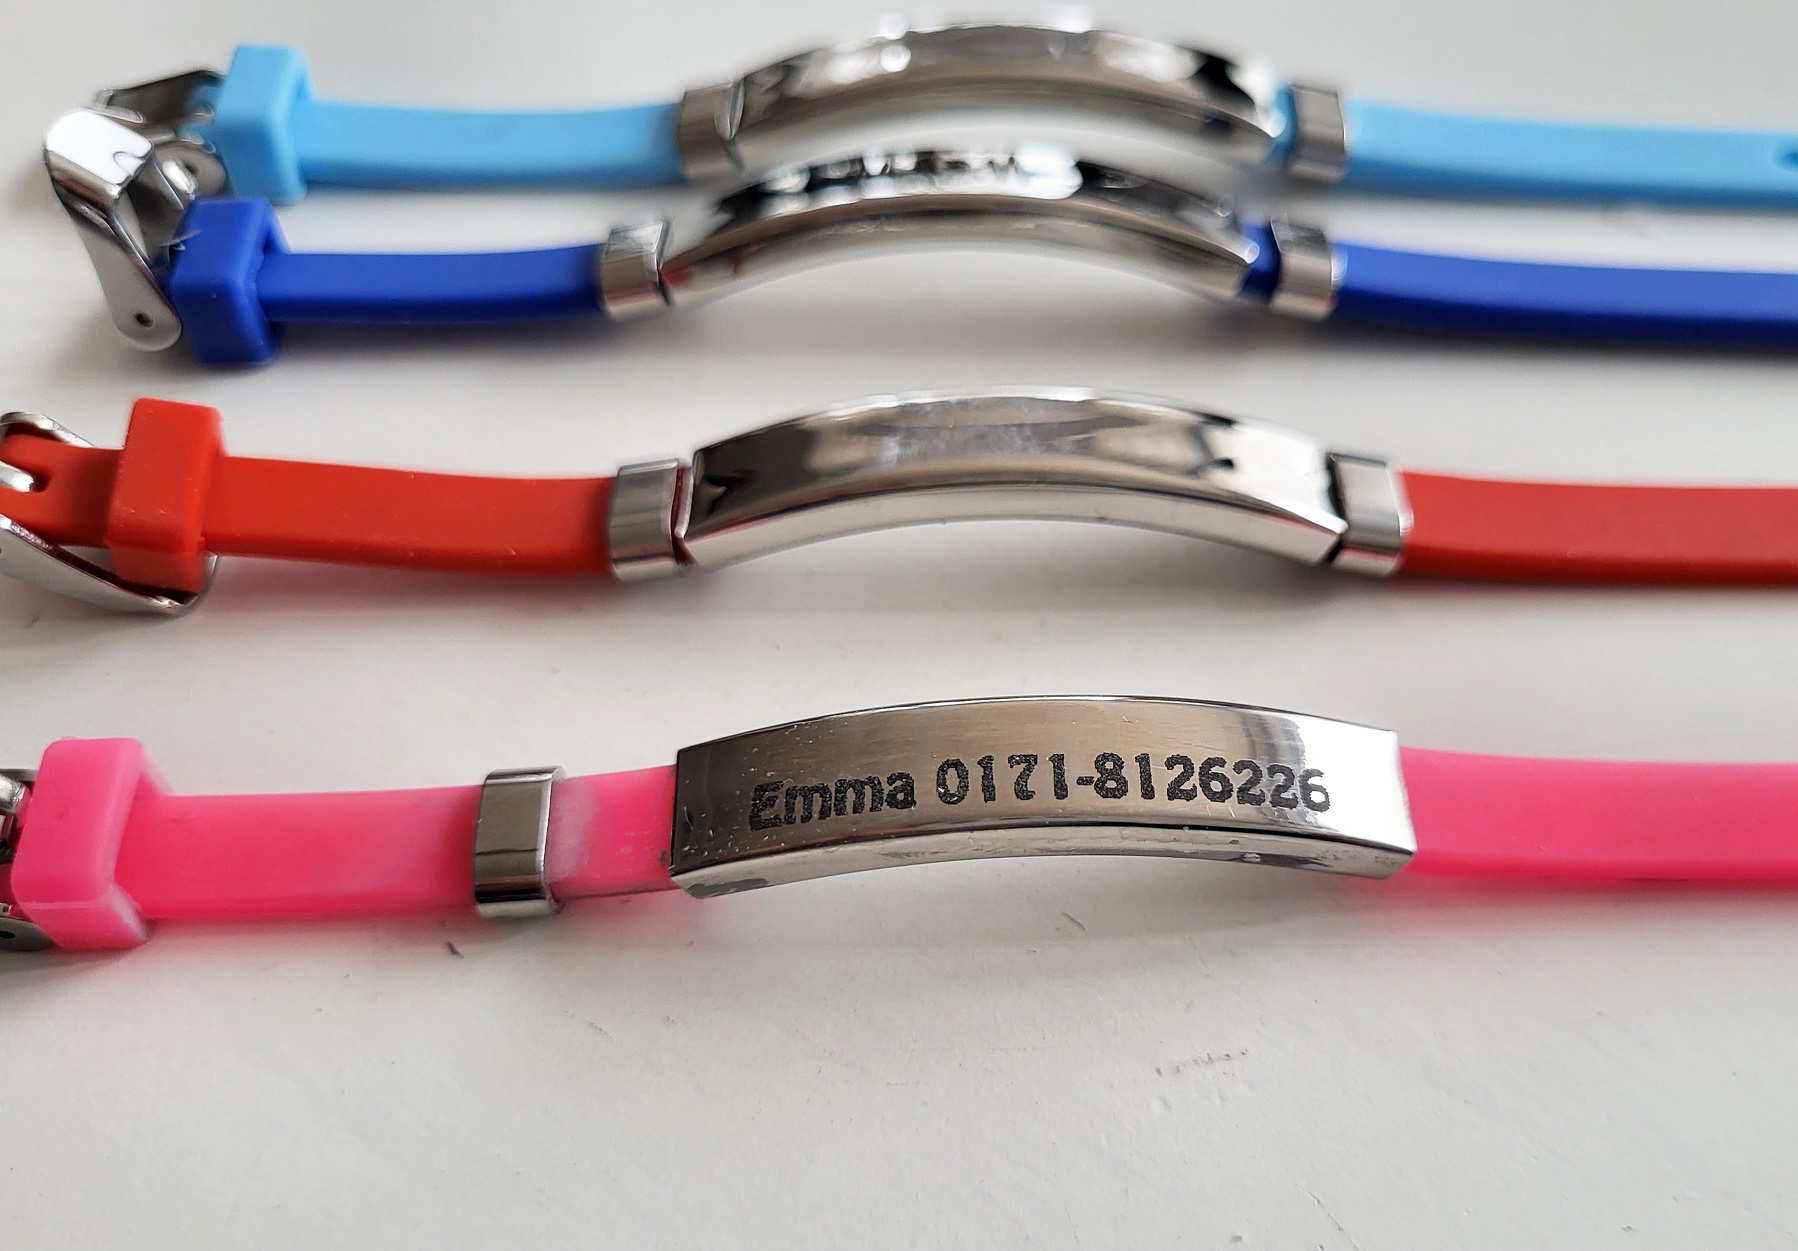 Notfall-/SOS-Armband aus Silikon mit Verschluß für Kinder